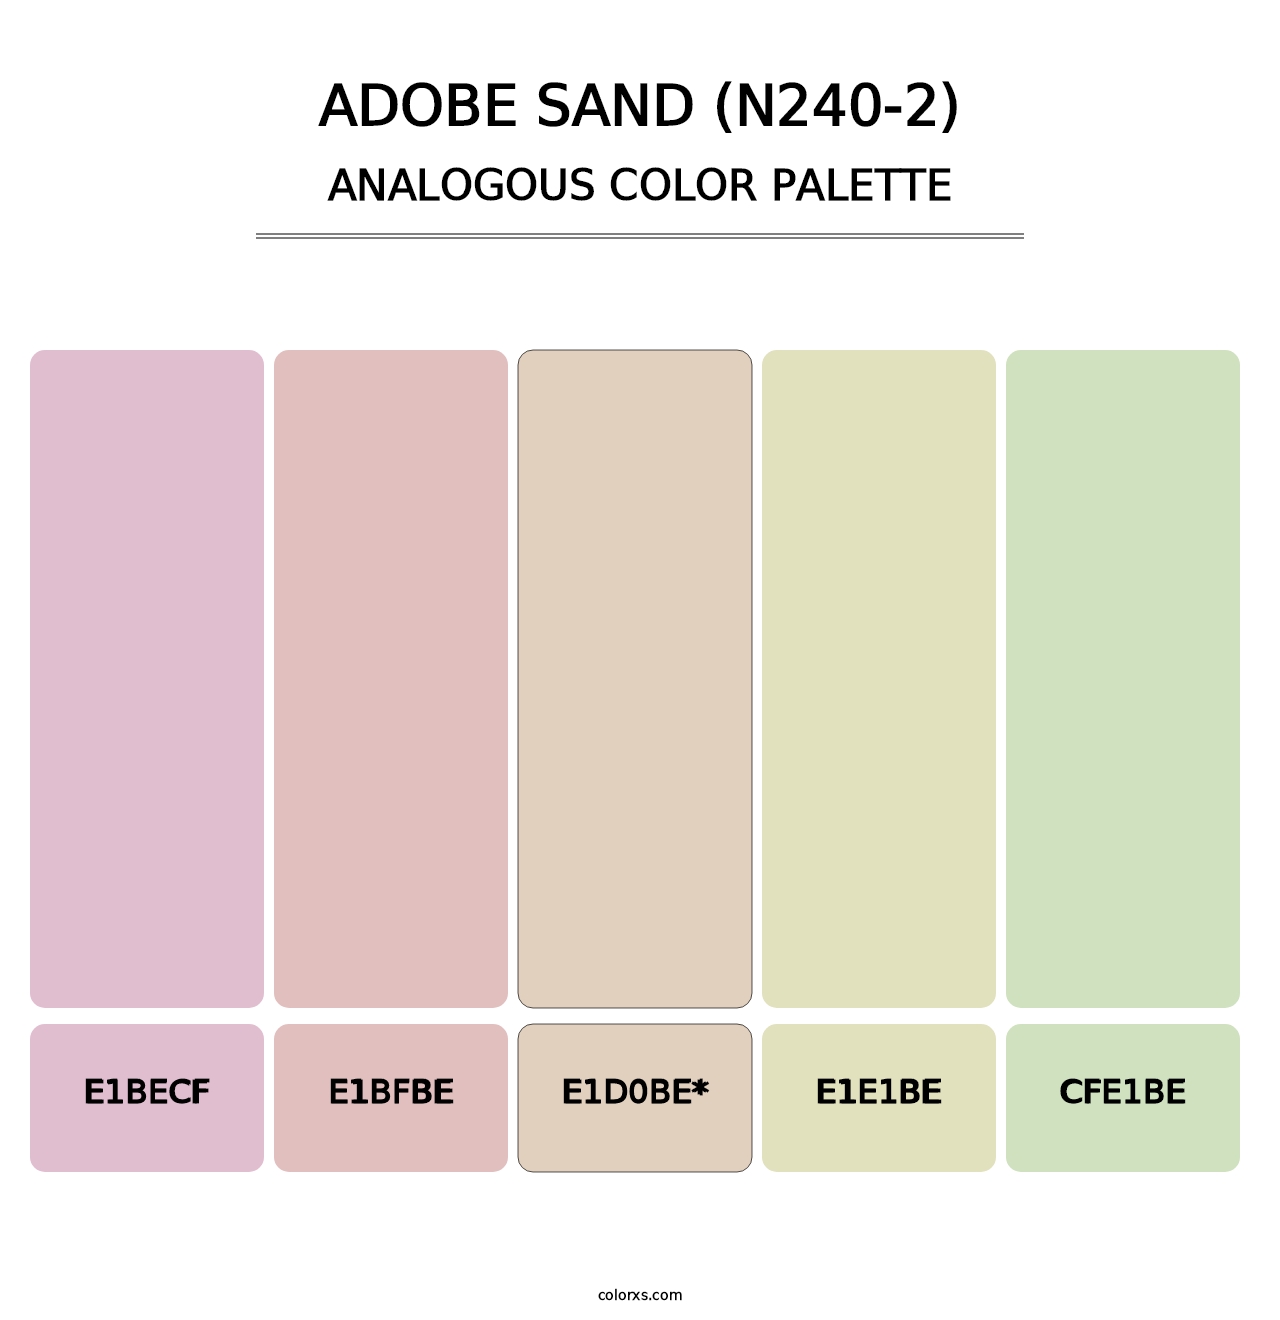 Adobe Sand (N240-2) - Analogous Color Palette